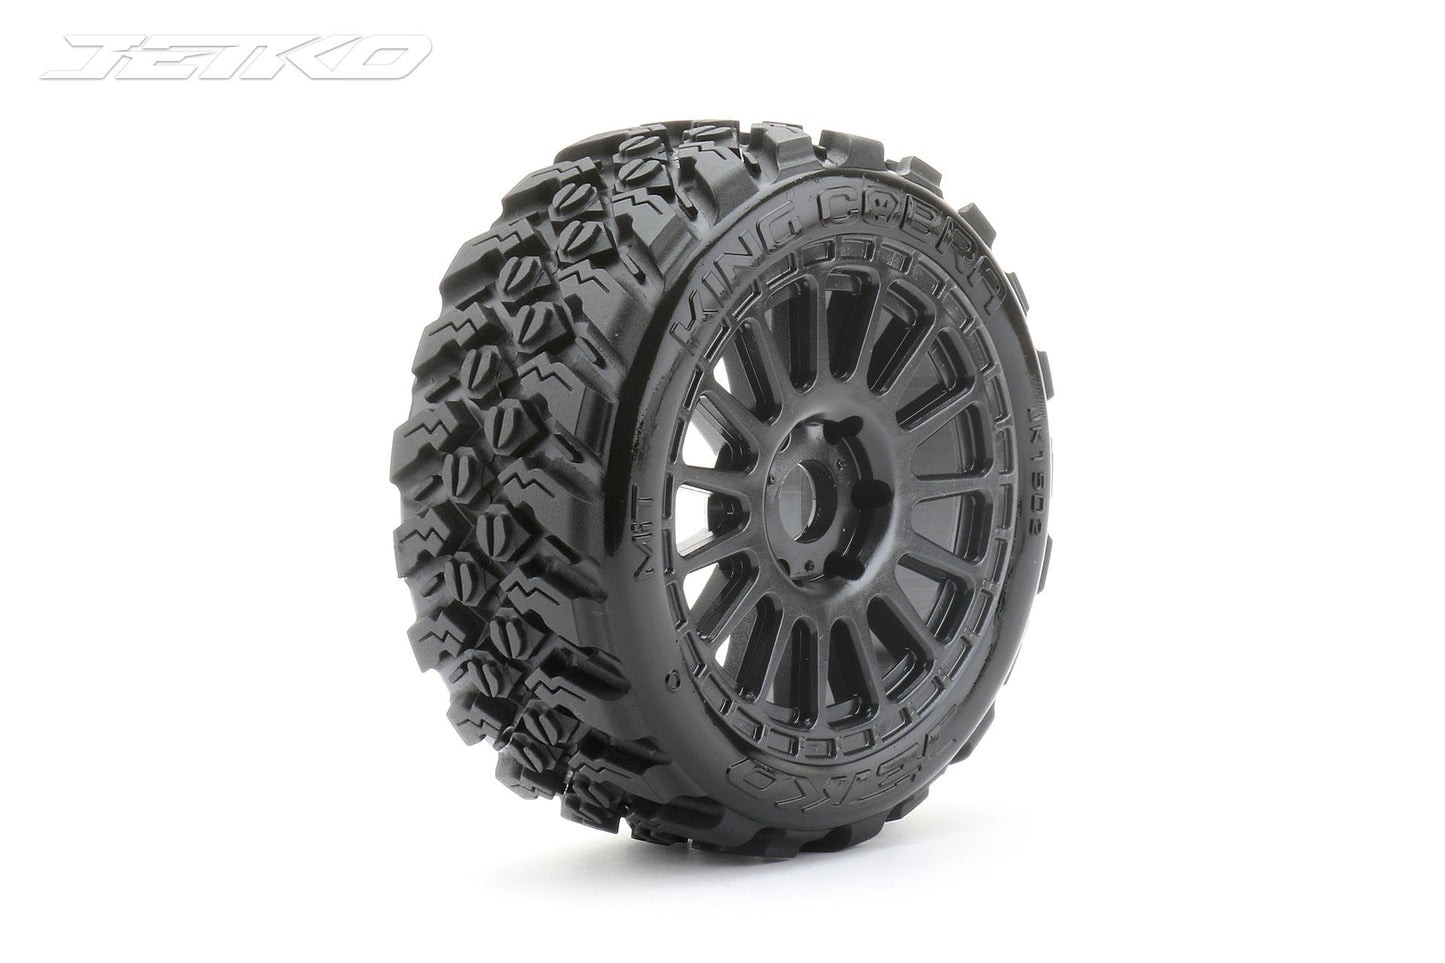 Jetko King Cobra 1/8 Buggy Tires Mounted on Black Radial Rims, Medium Soft, Belted (2)